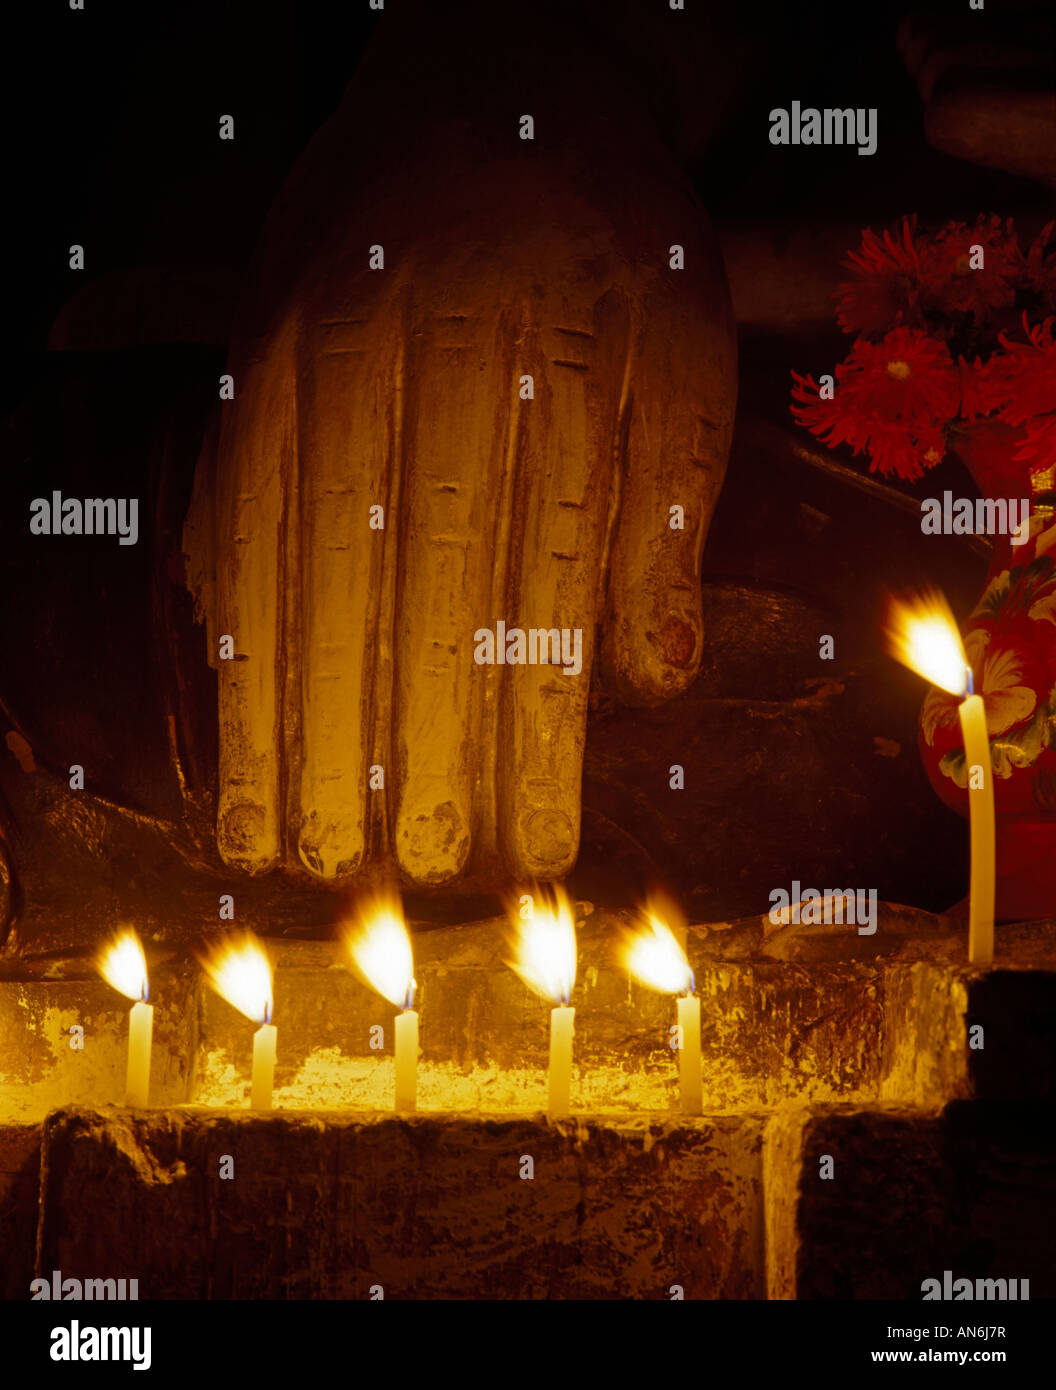 hand of a buddha statue in the light of candles Buddhahand im nächtlichen Kerzenlicht Stock Photo